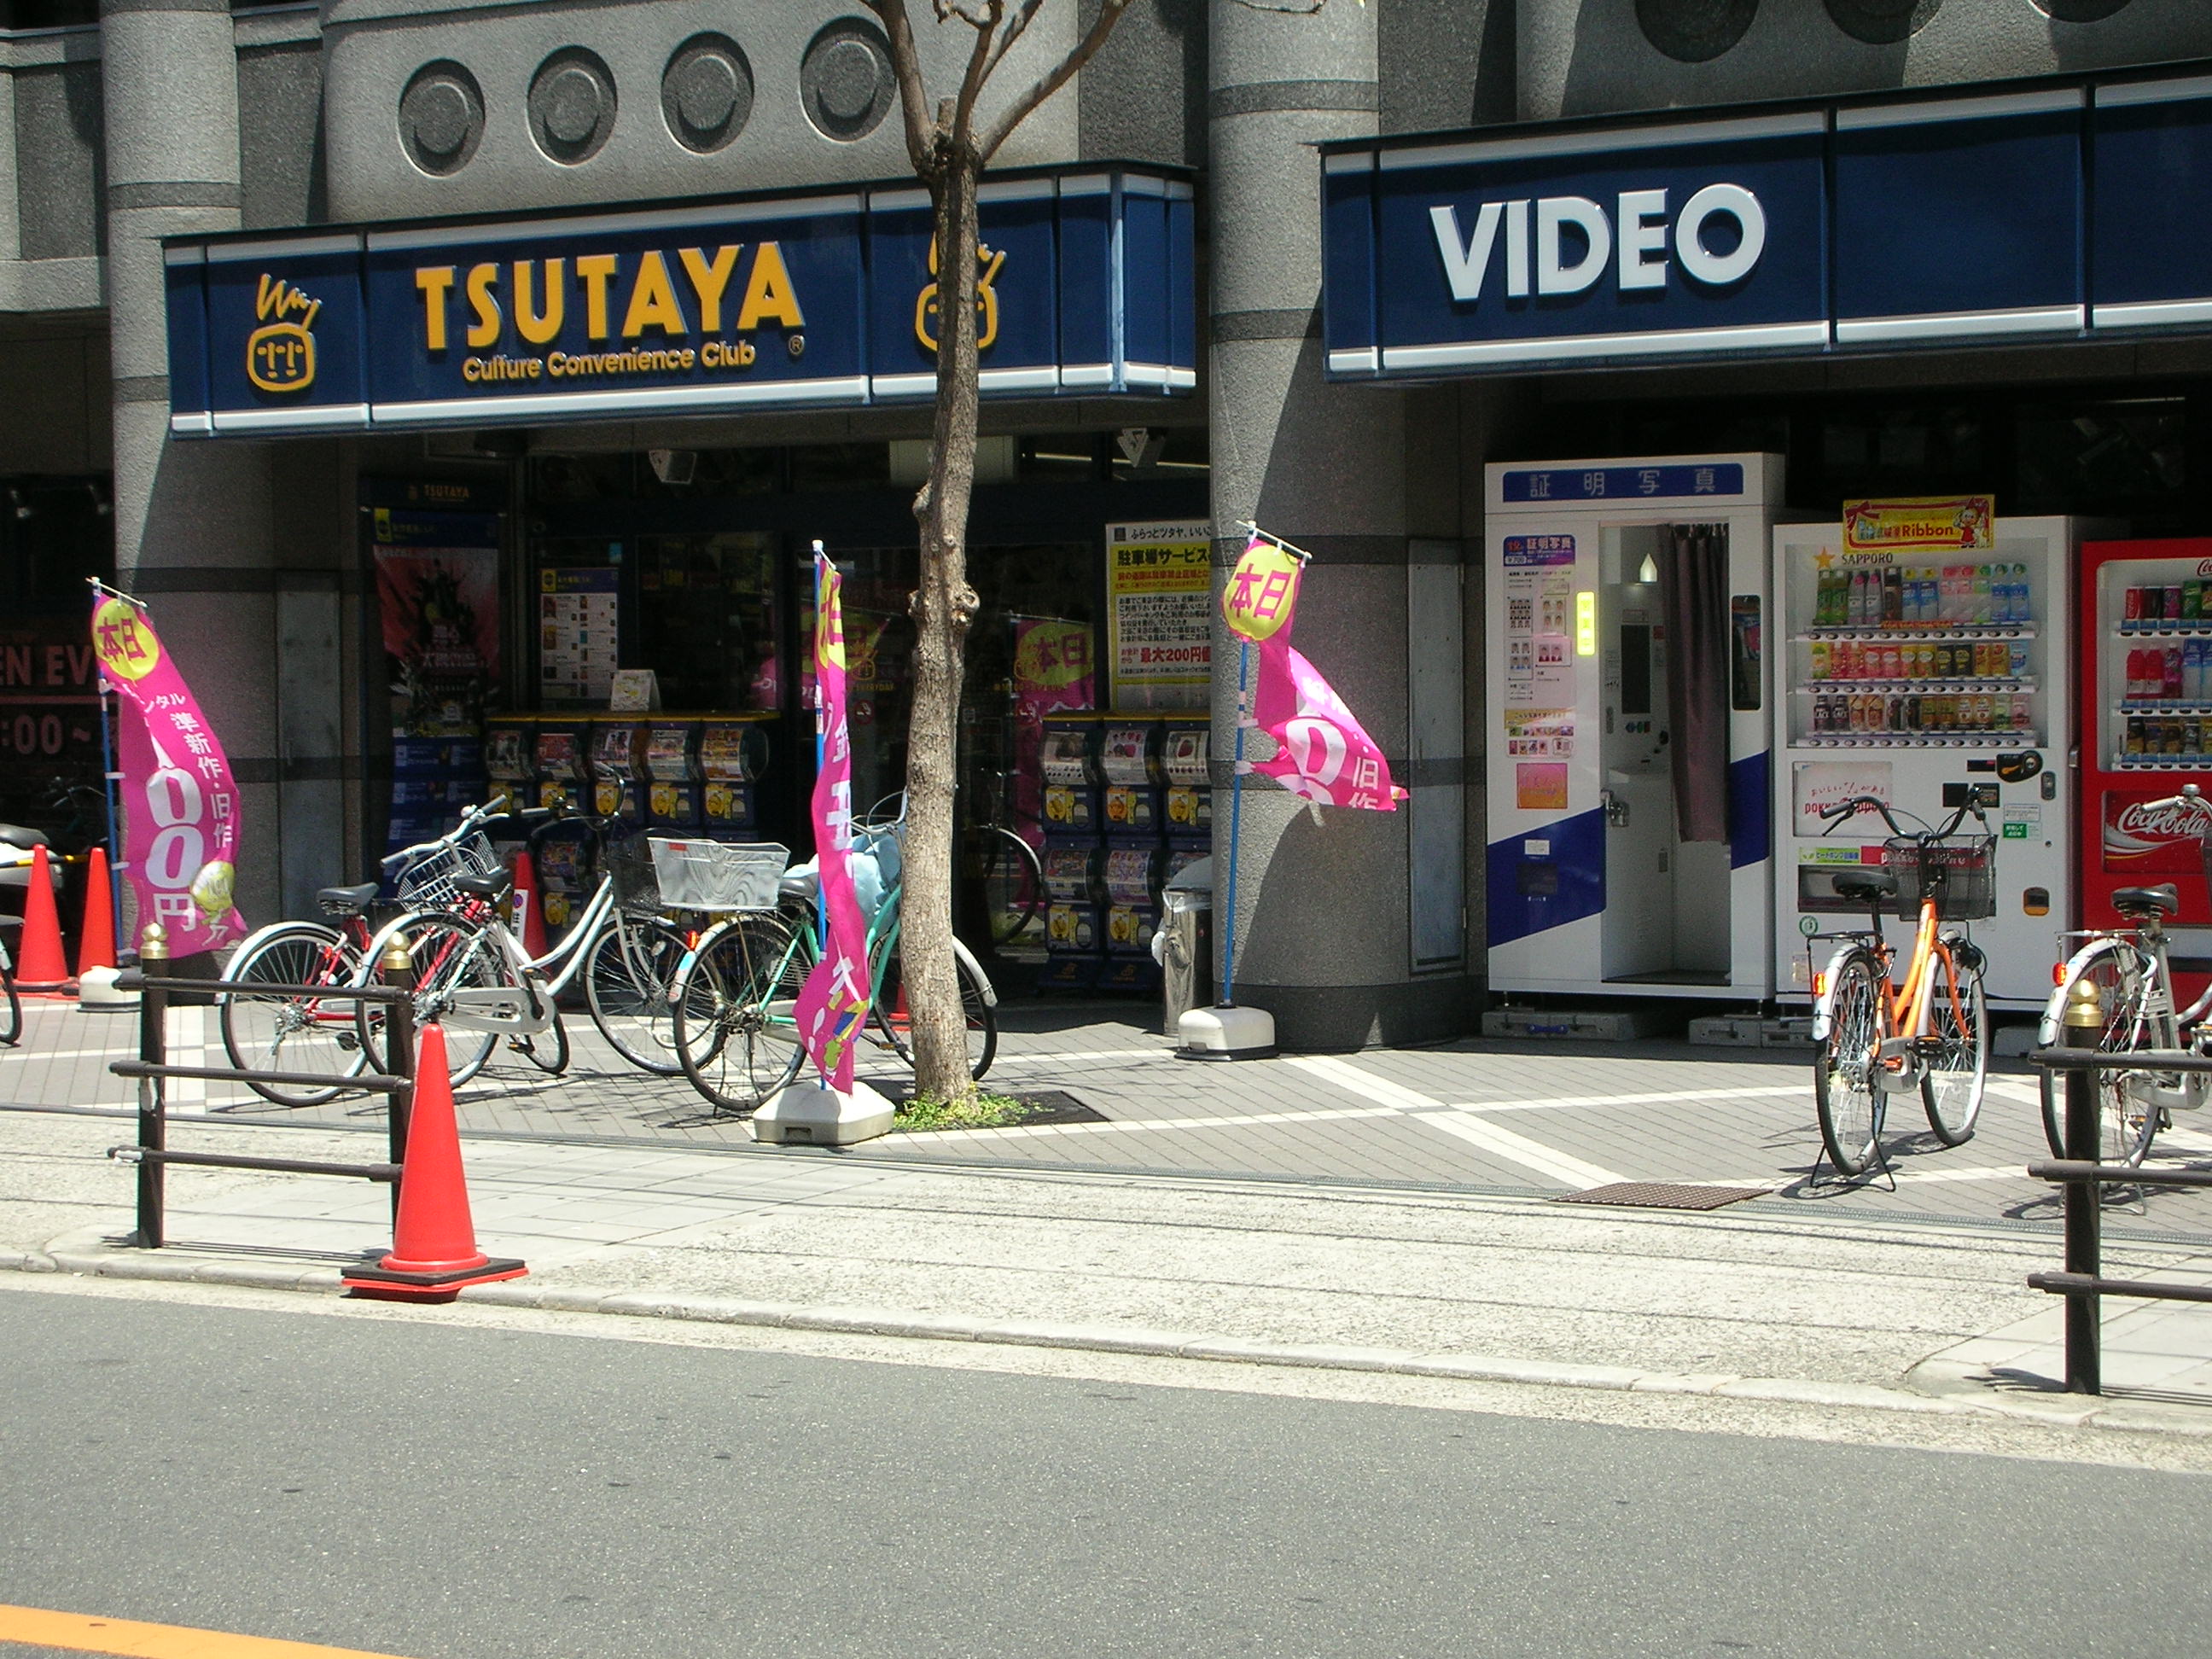 Rental video. TSUTAYA Kami Shinjo shop 411m up (video rental)